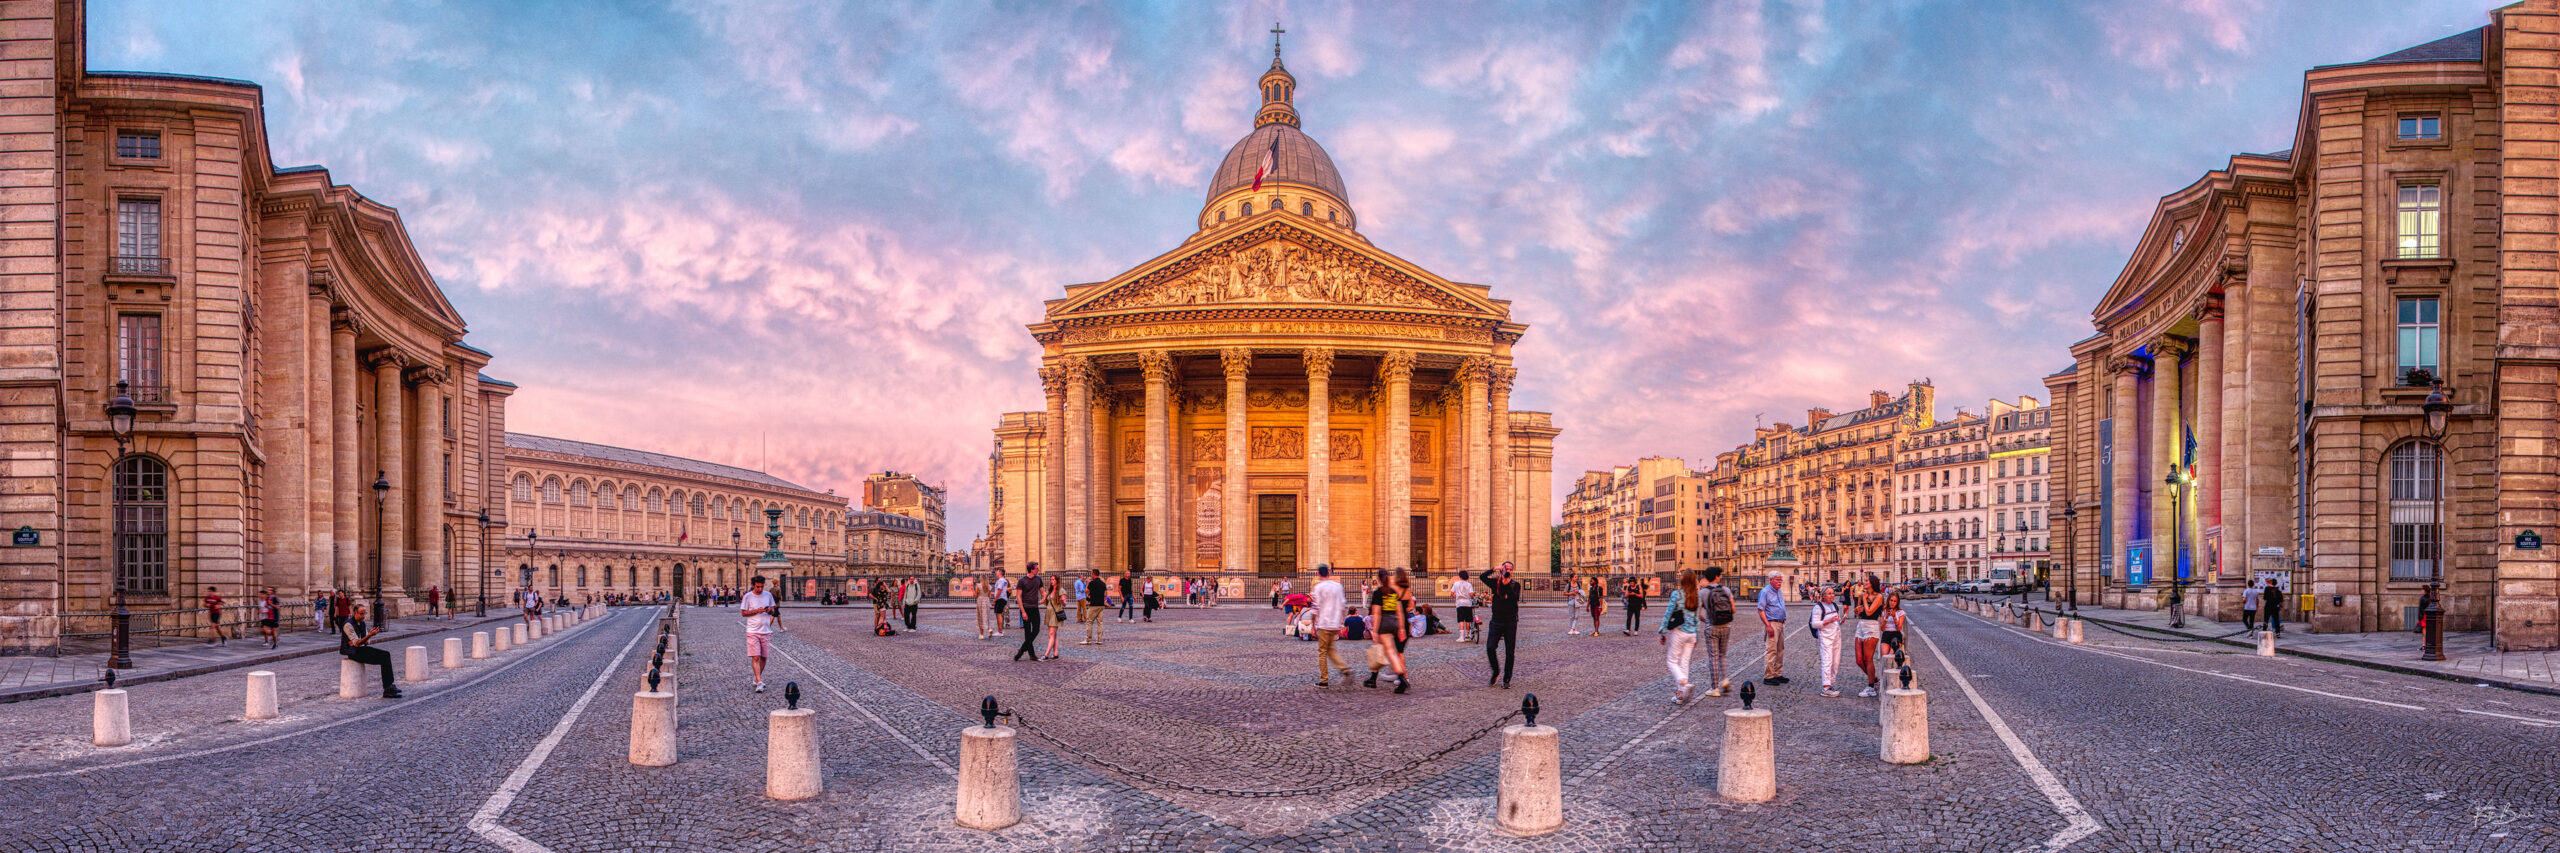 Paris panoramic view Pantheon